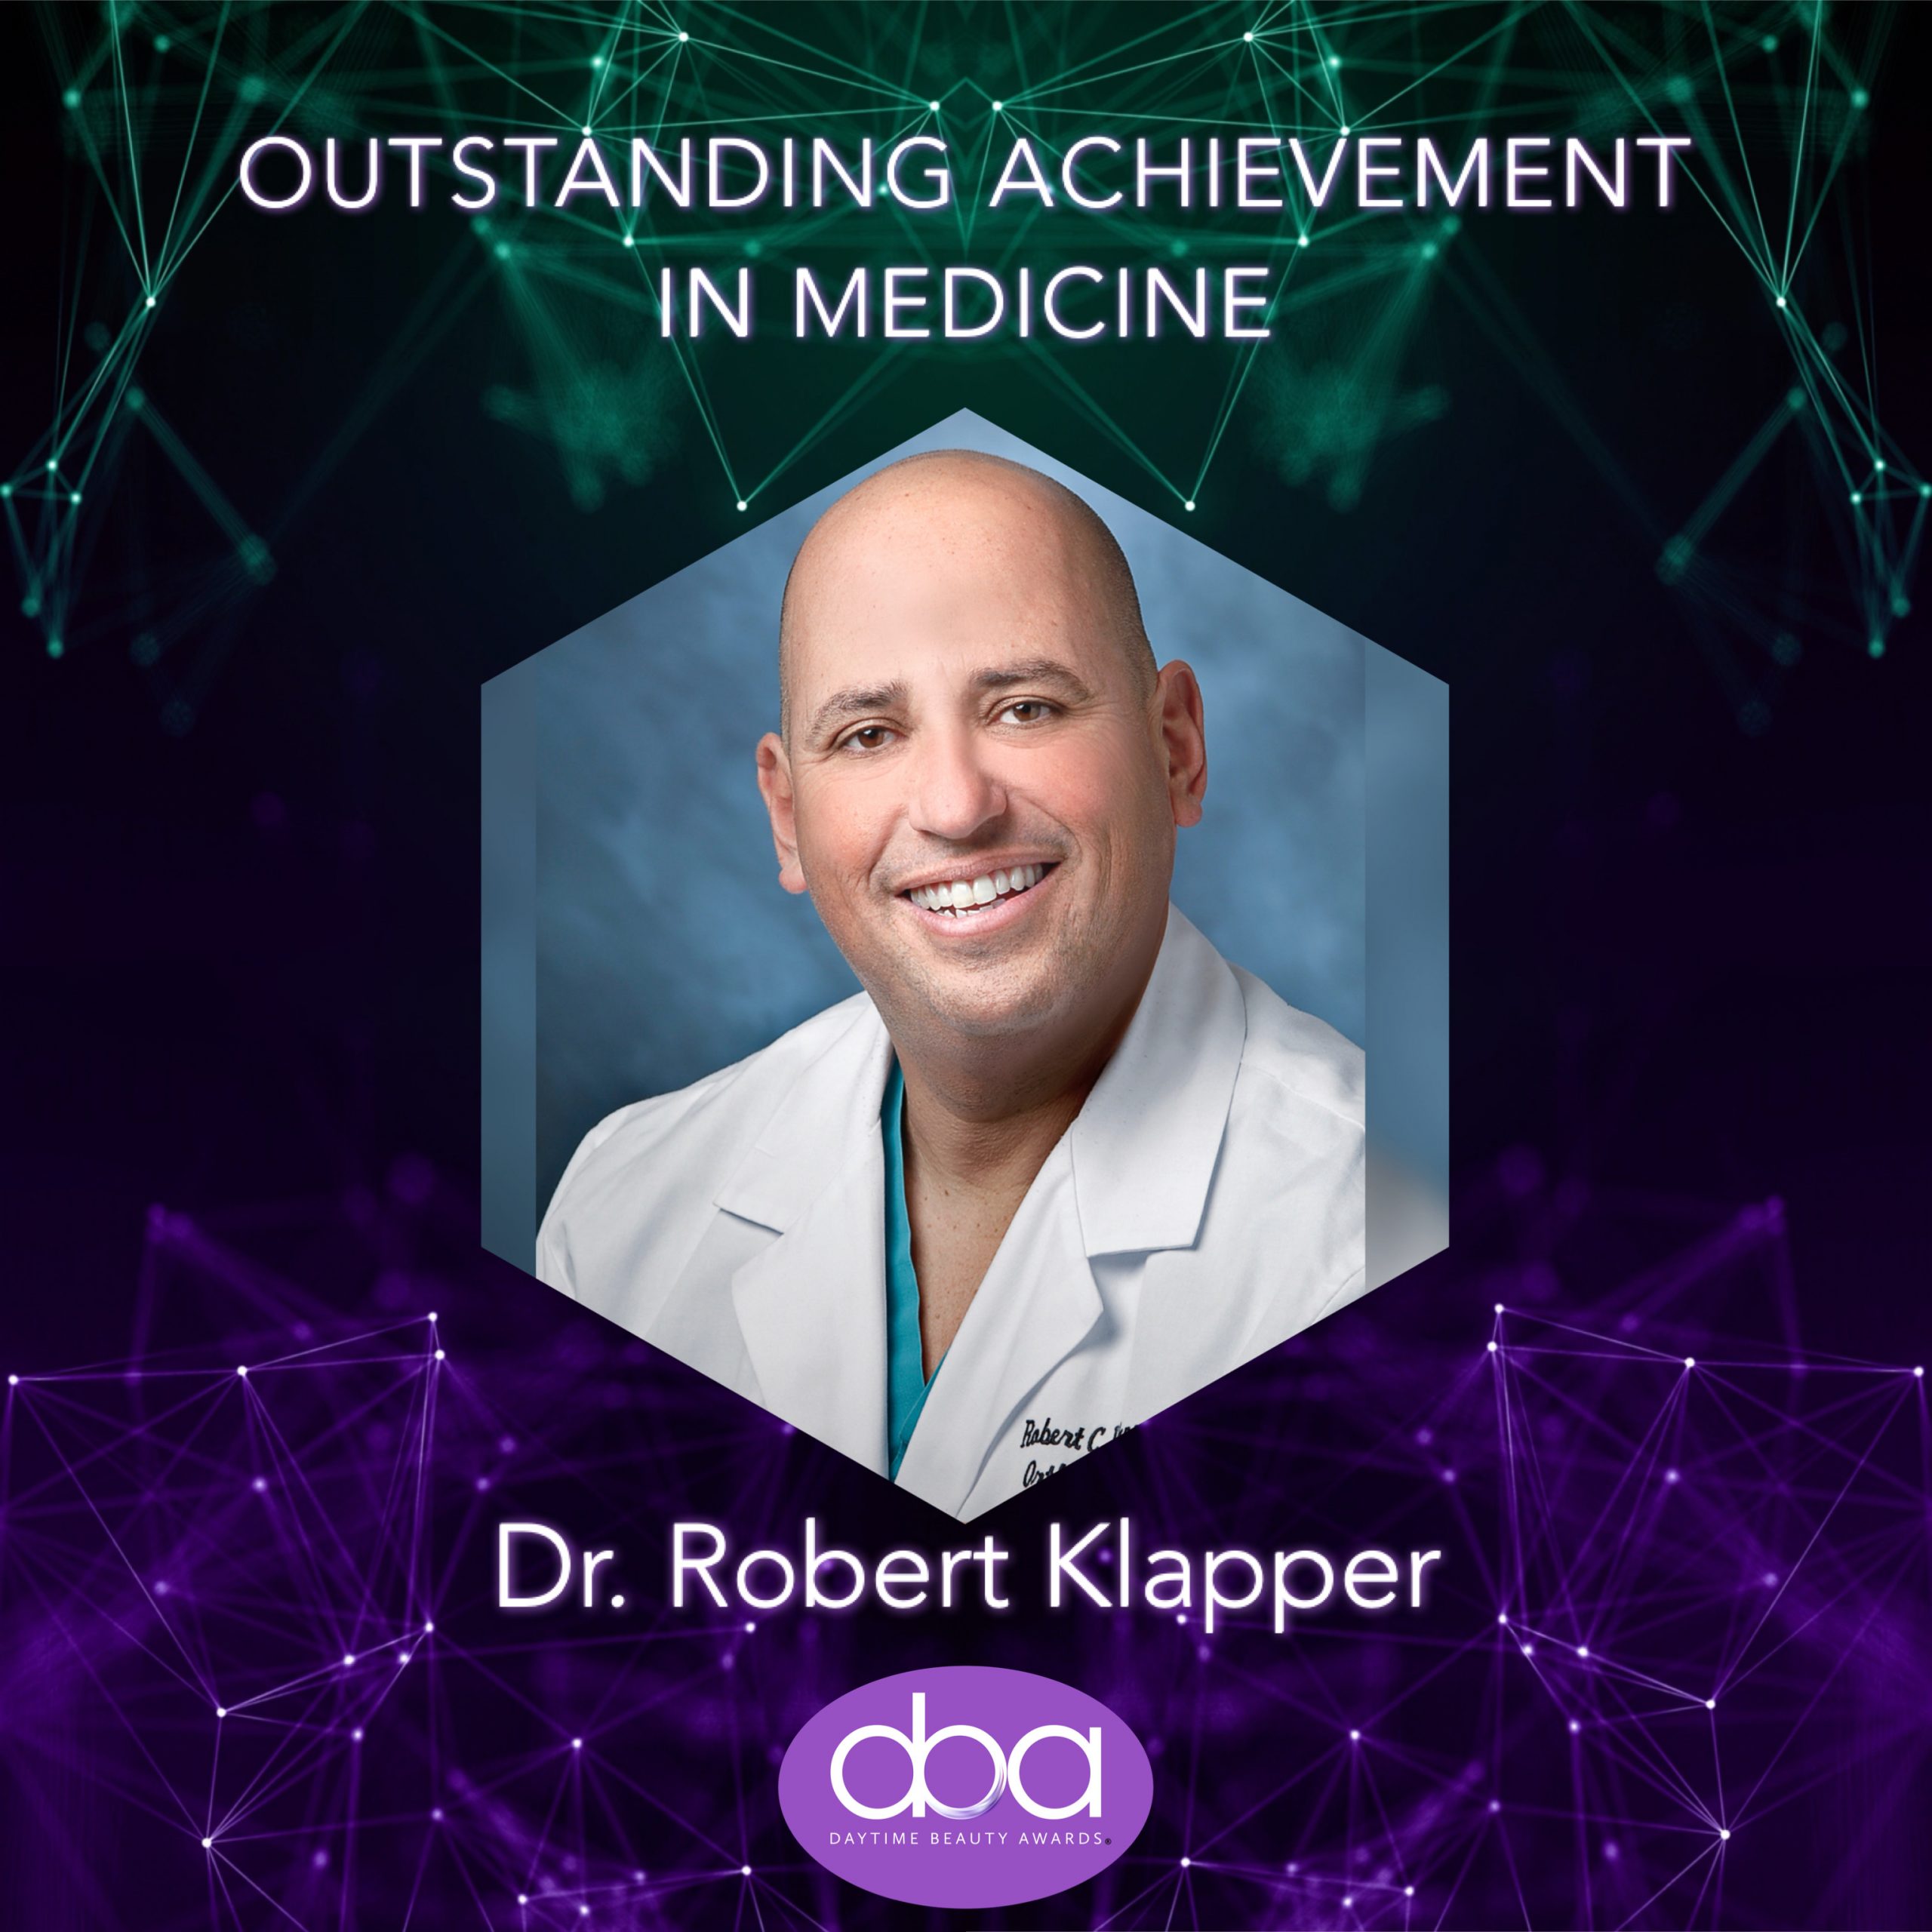 dr. robert klapper, orthopedic surgeon, daytime beauty awards